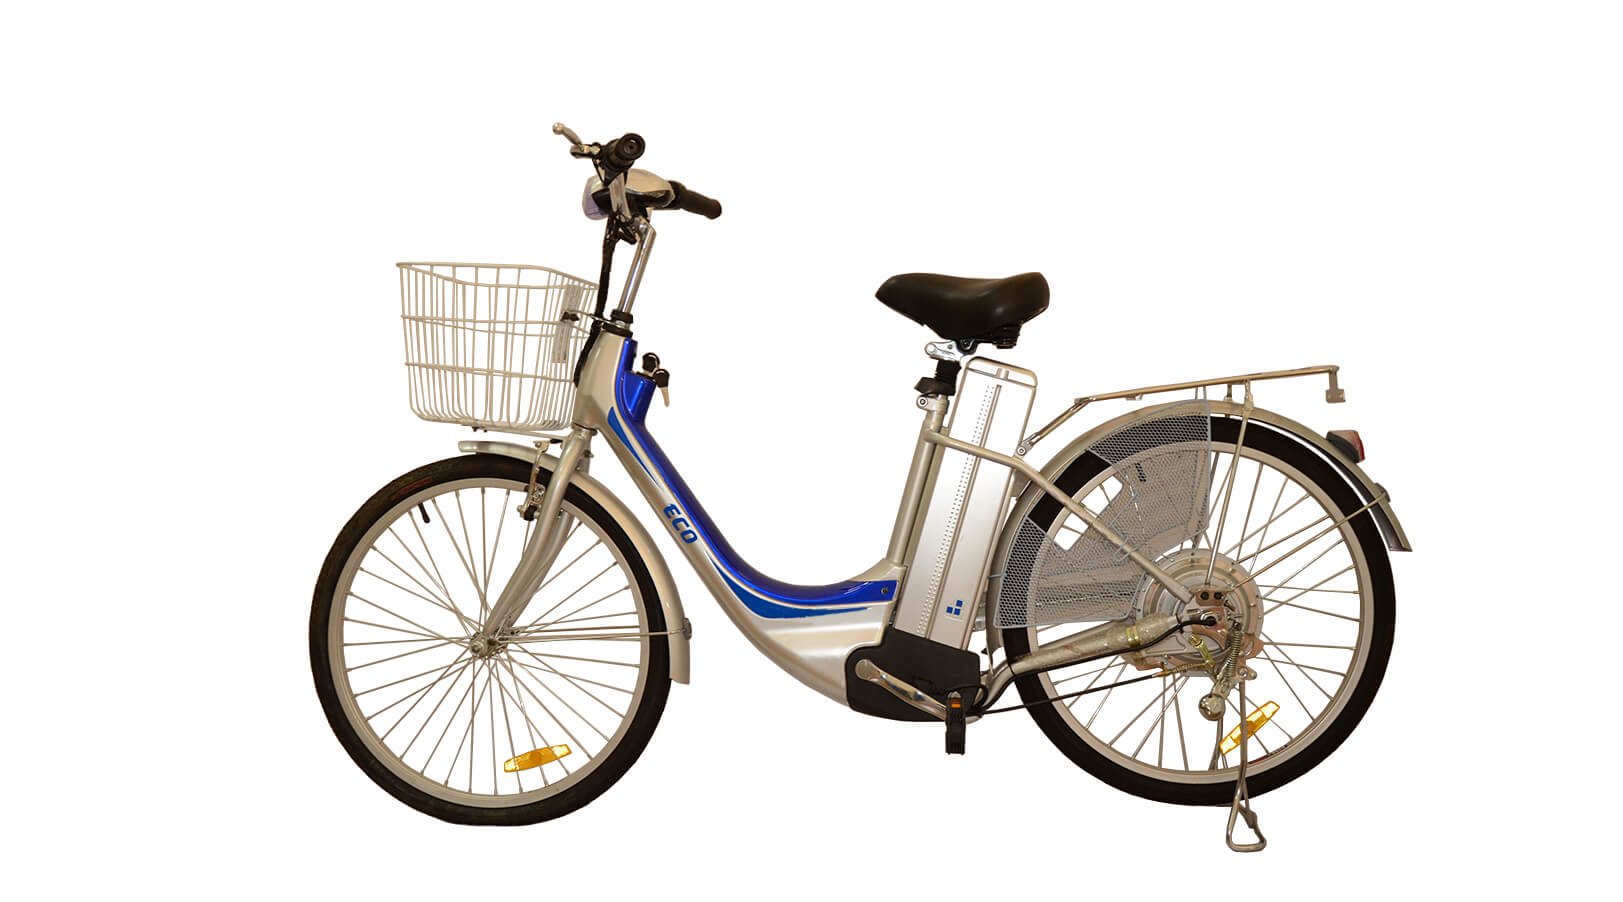 Электровелосипед Sky Bike ECO